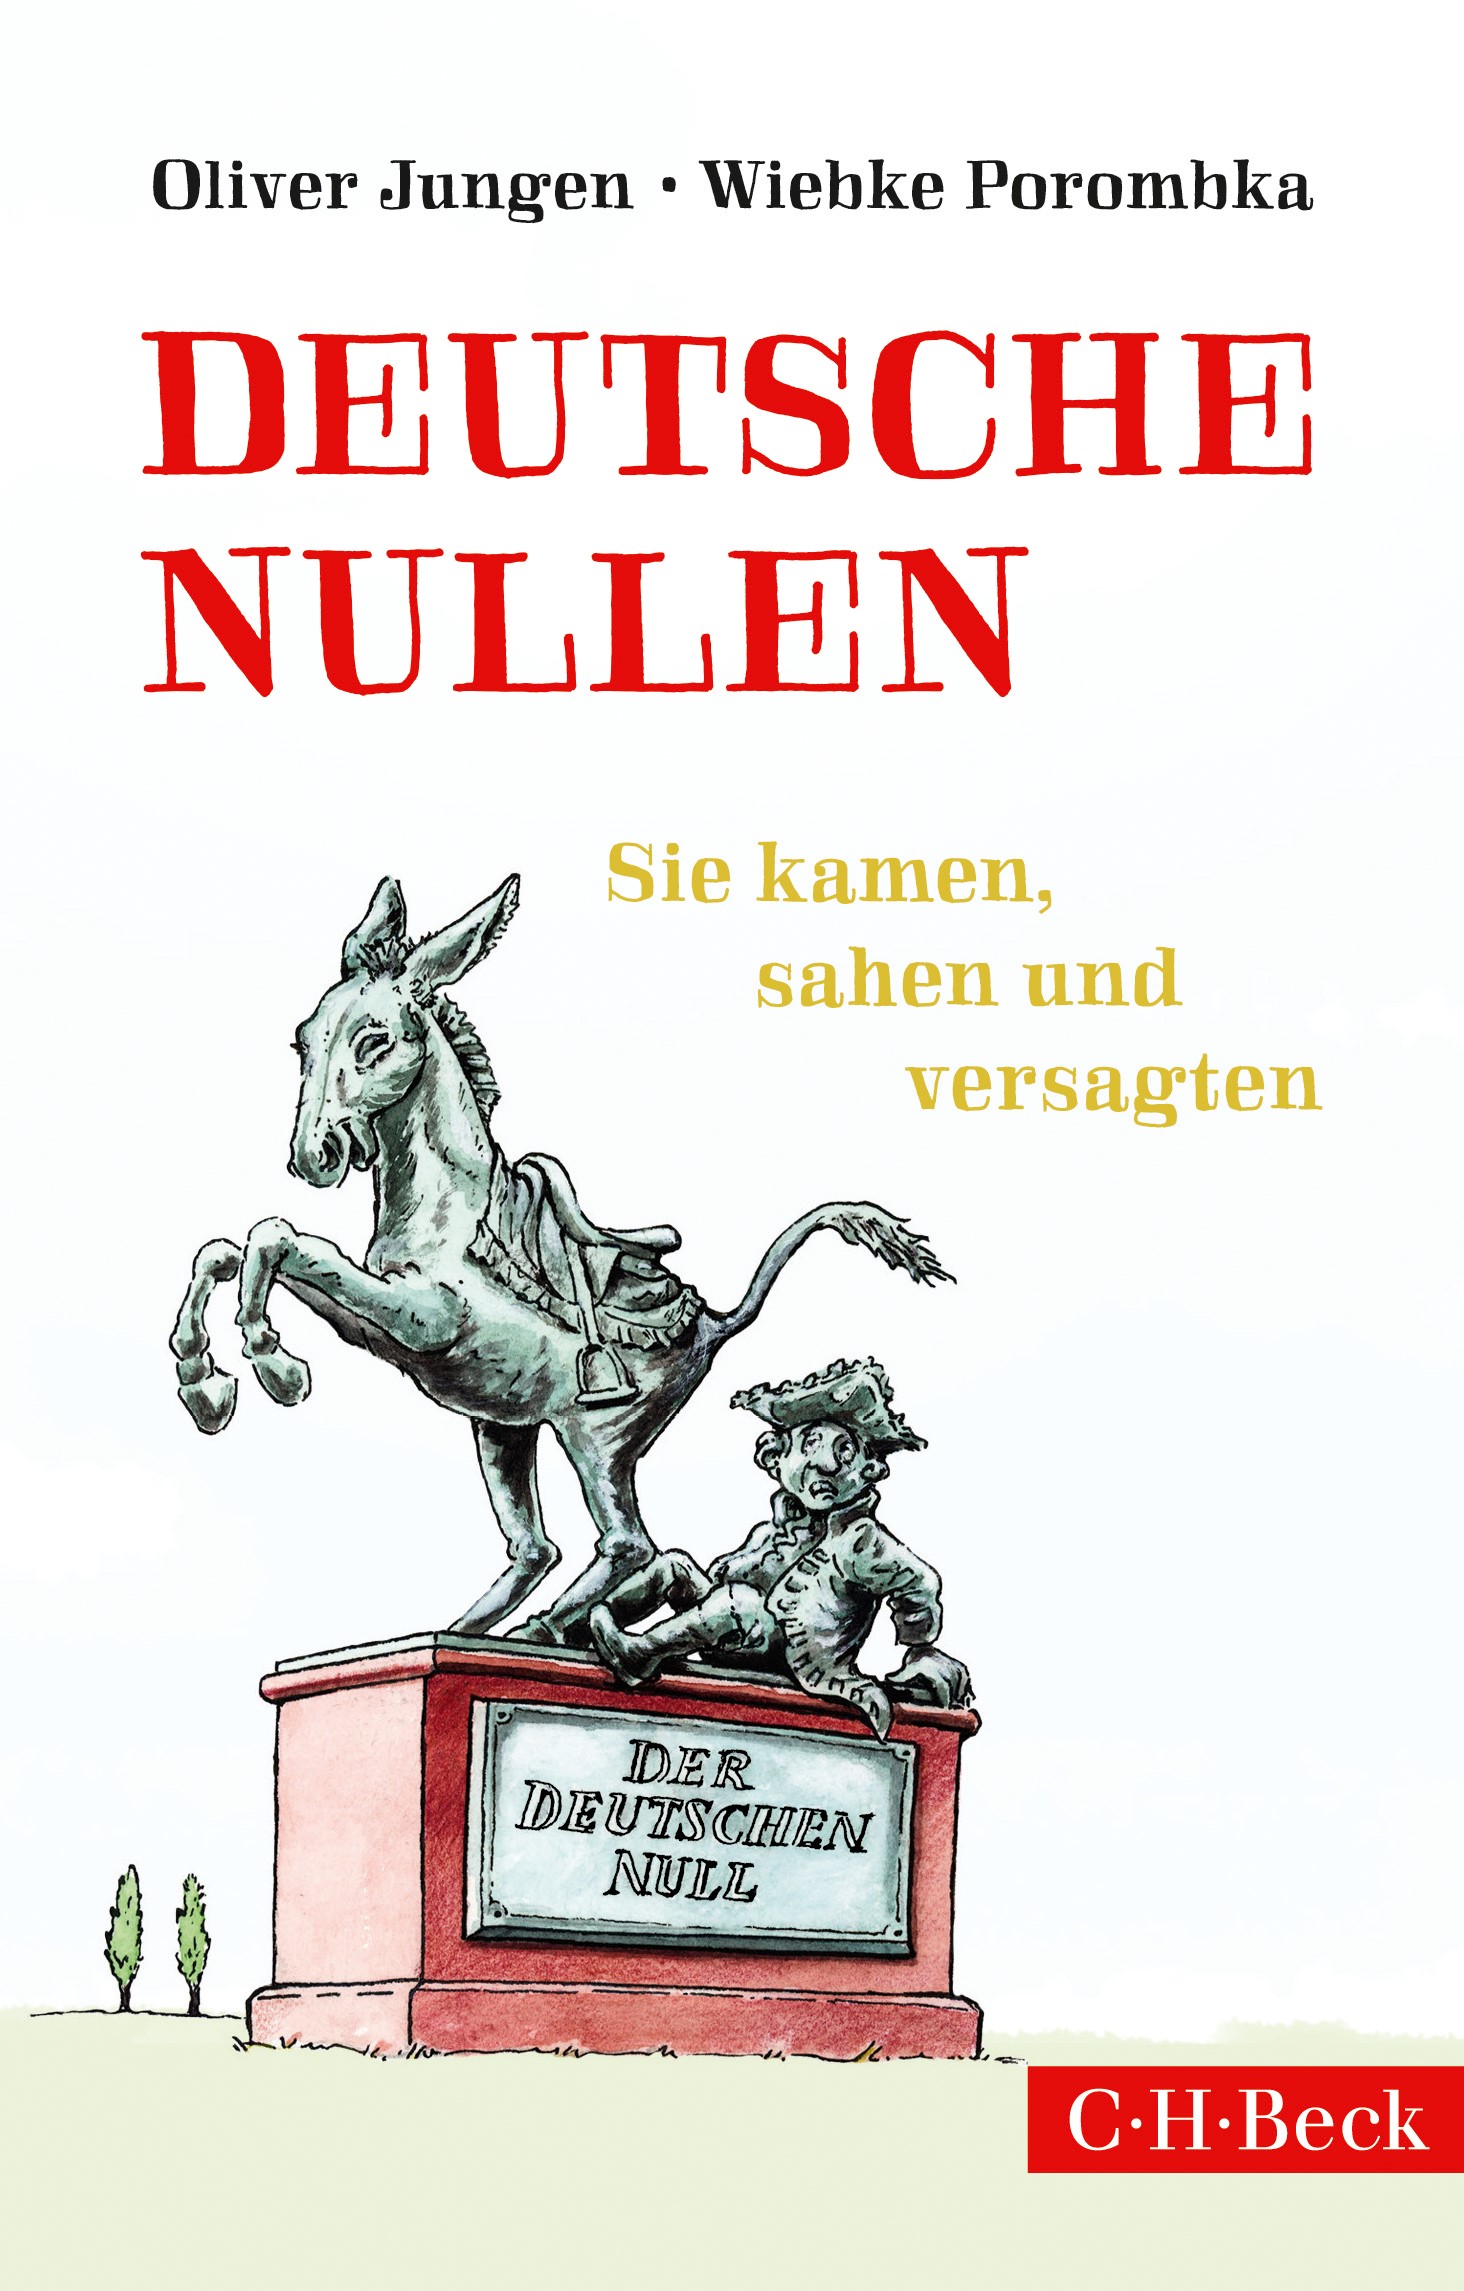 Cover: Jungen, Oliver / Porombka, Wiebke, Deutsche Nullen